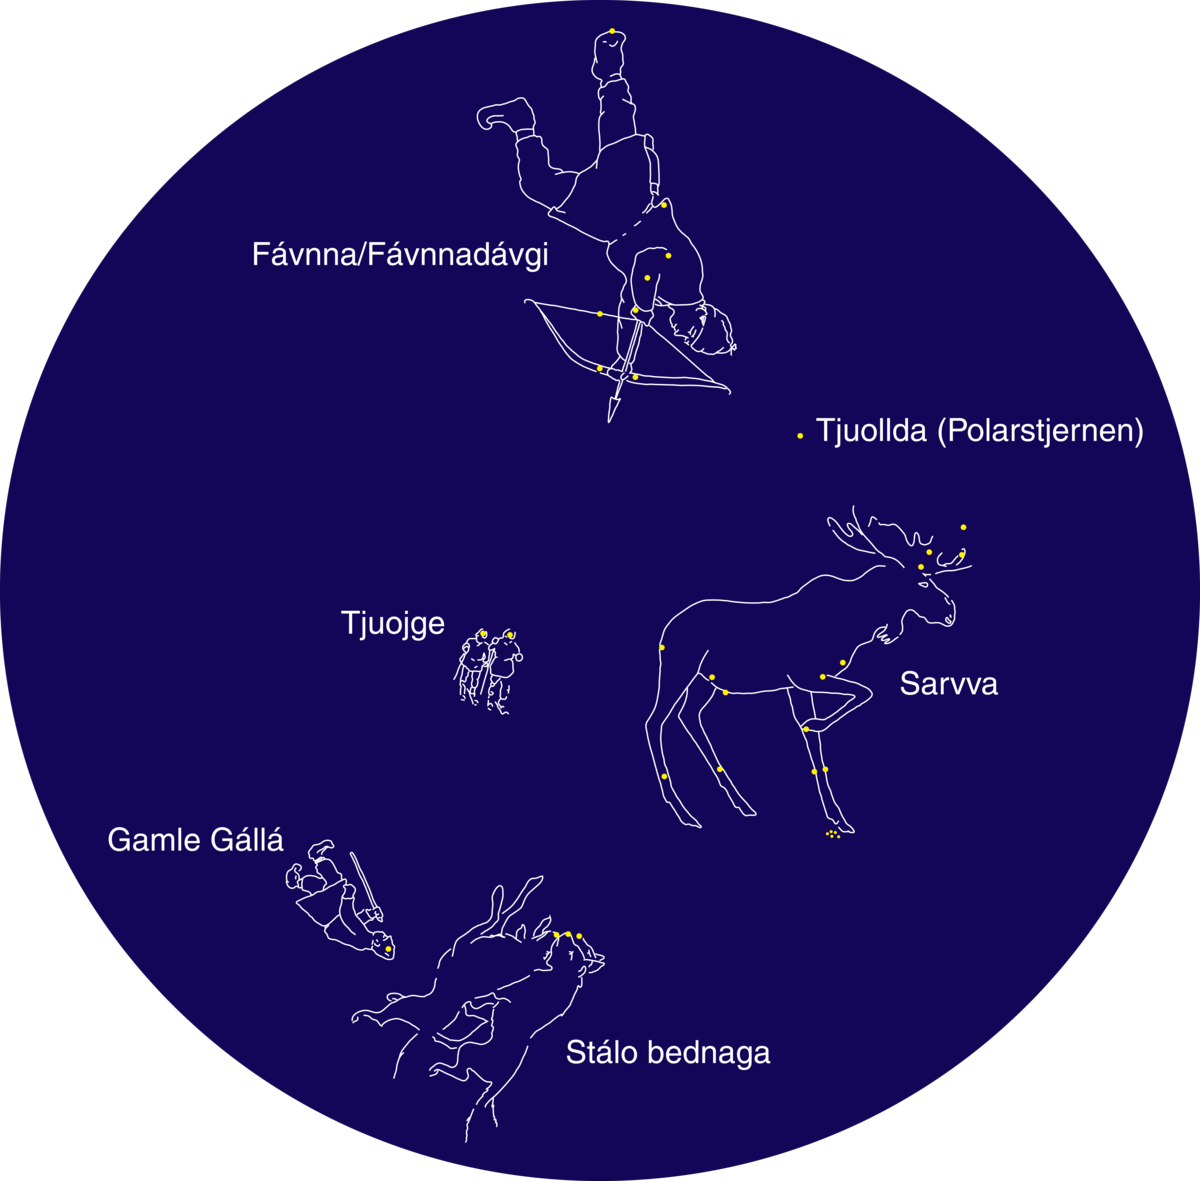 Stjerne (samiske stjernebilder)